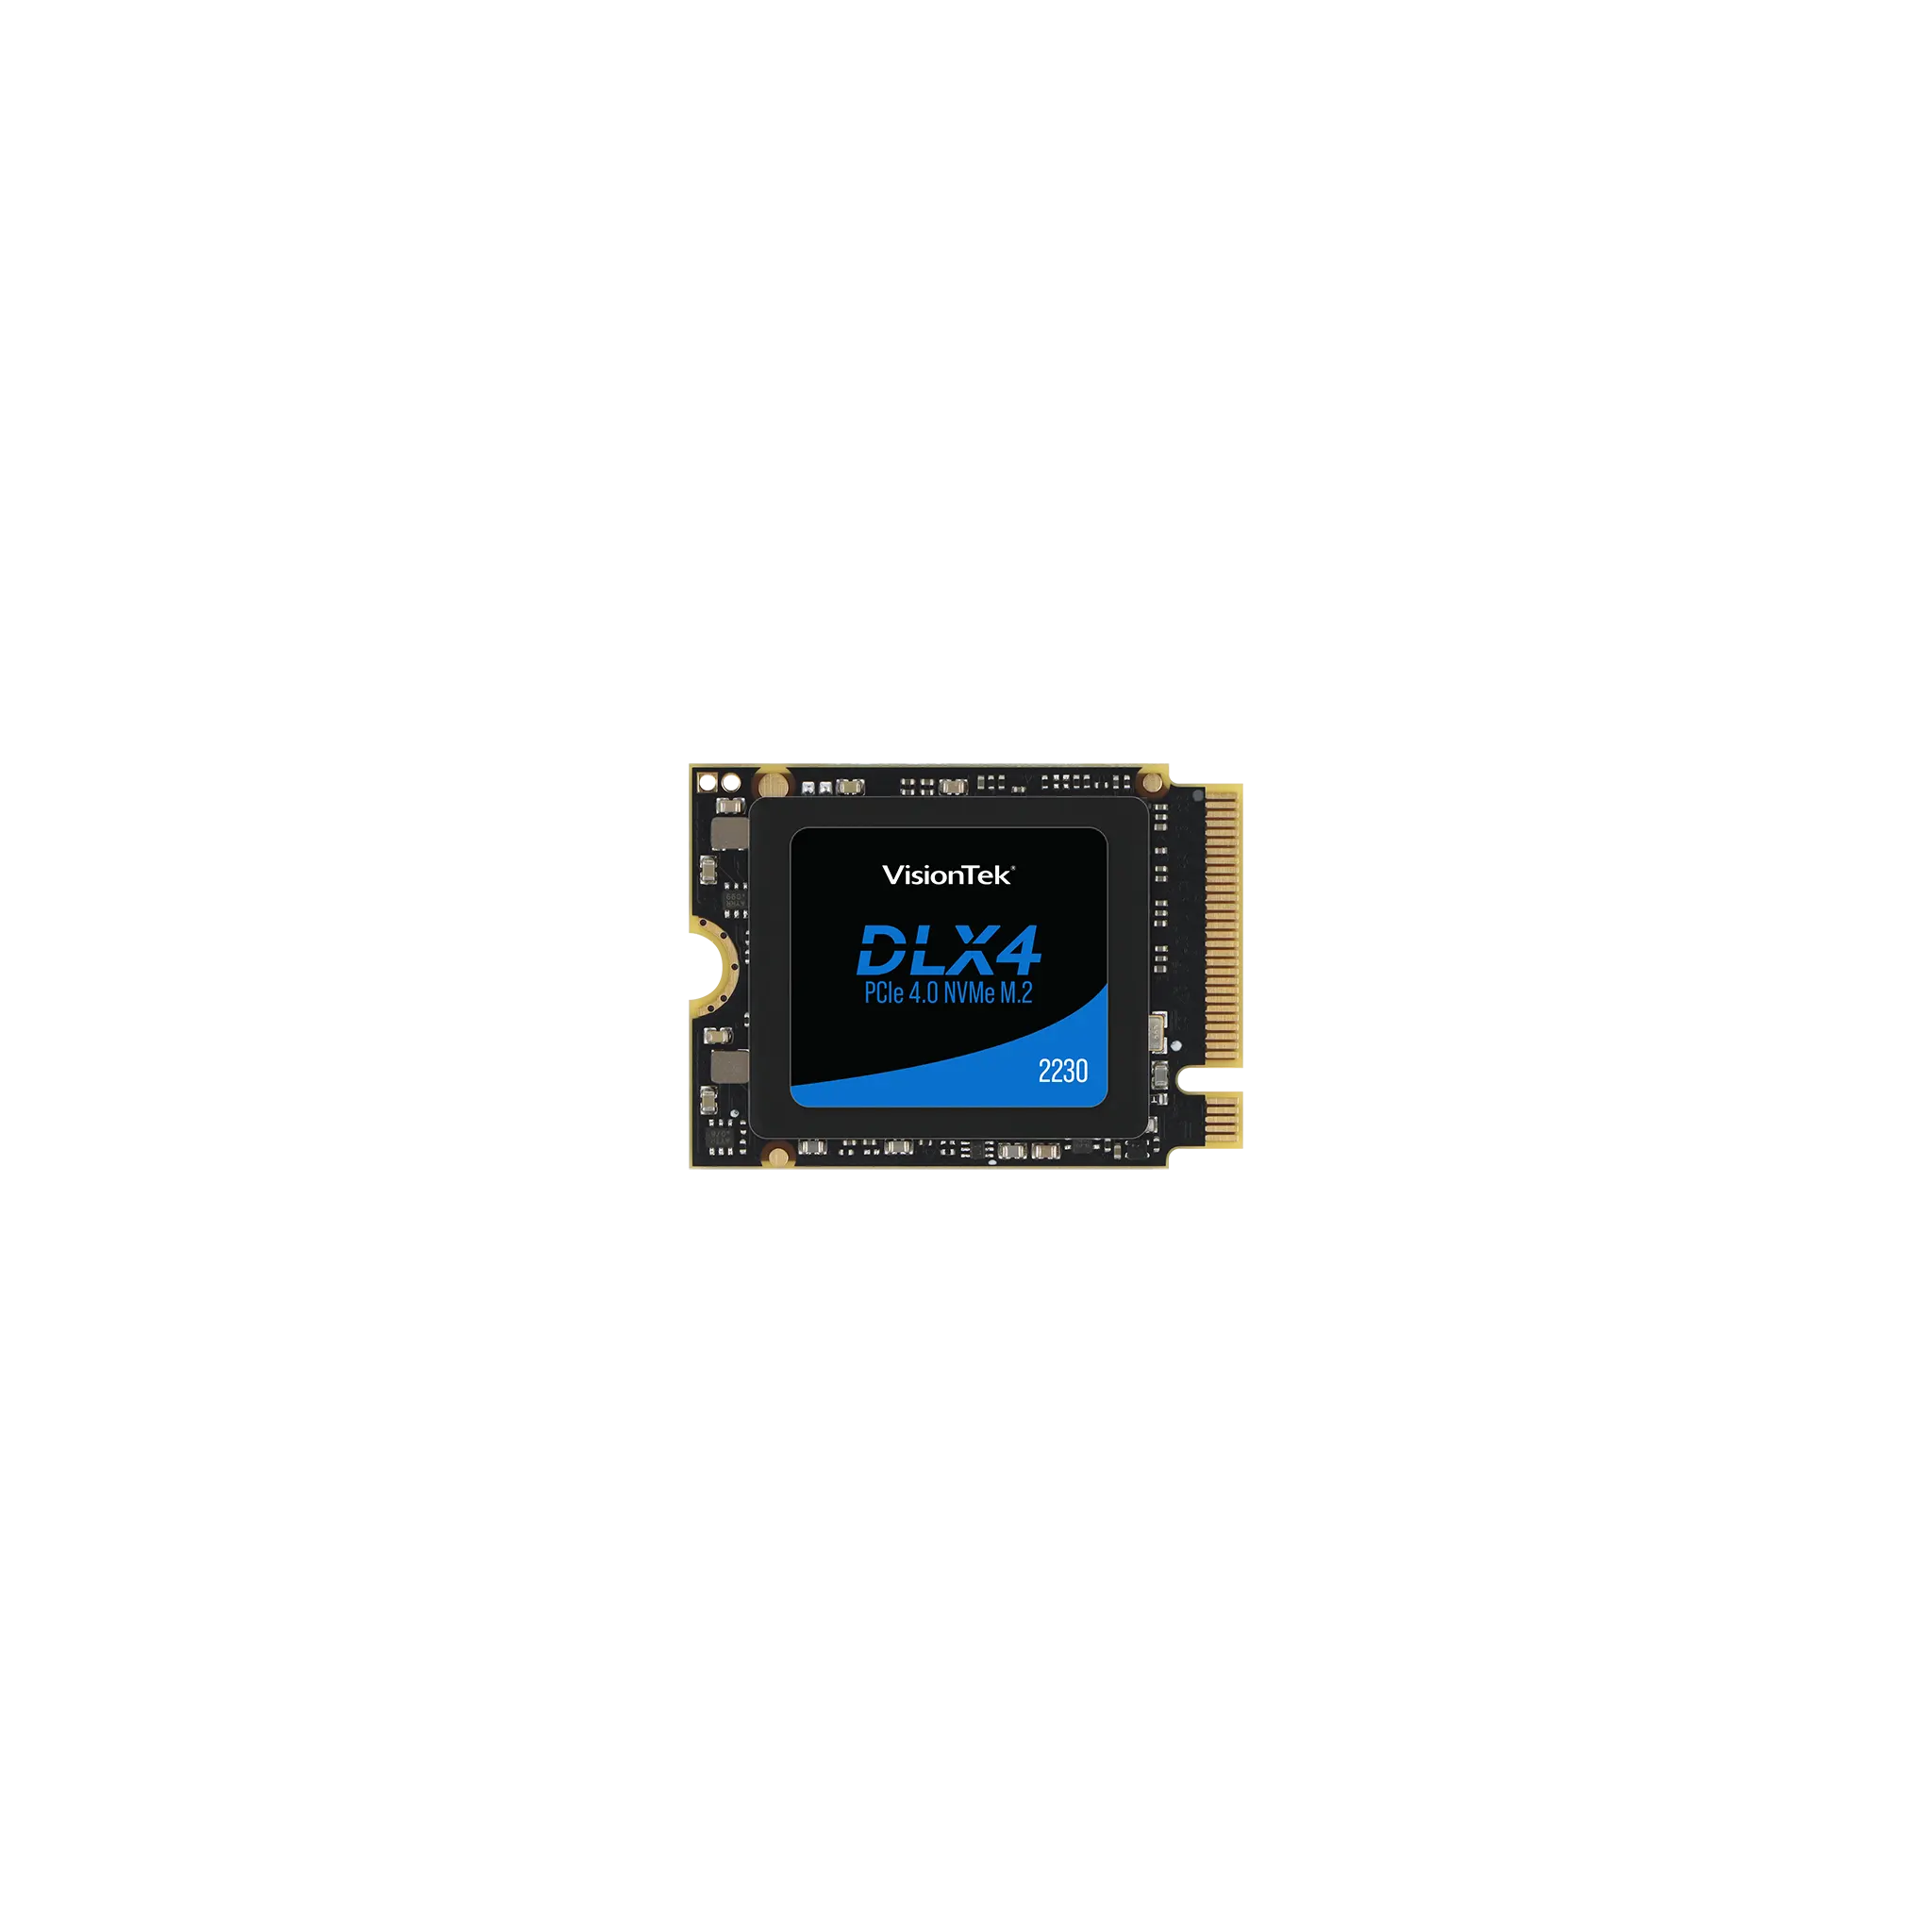 bred kranium Biskop VisionTek DLX4 2230 M.2 PCIe 4.0 x4 SSD (NVMe) – VisionTek.com